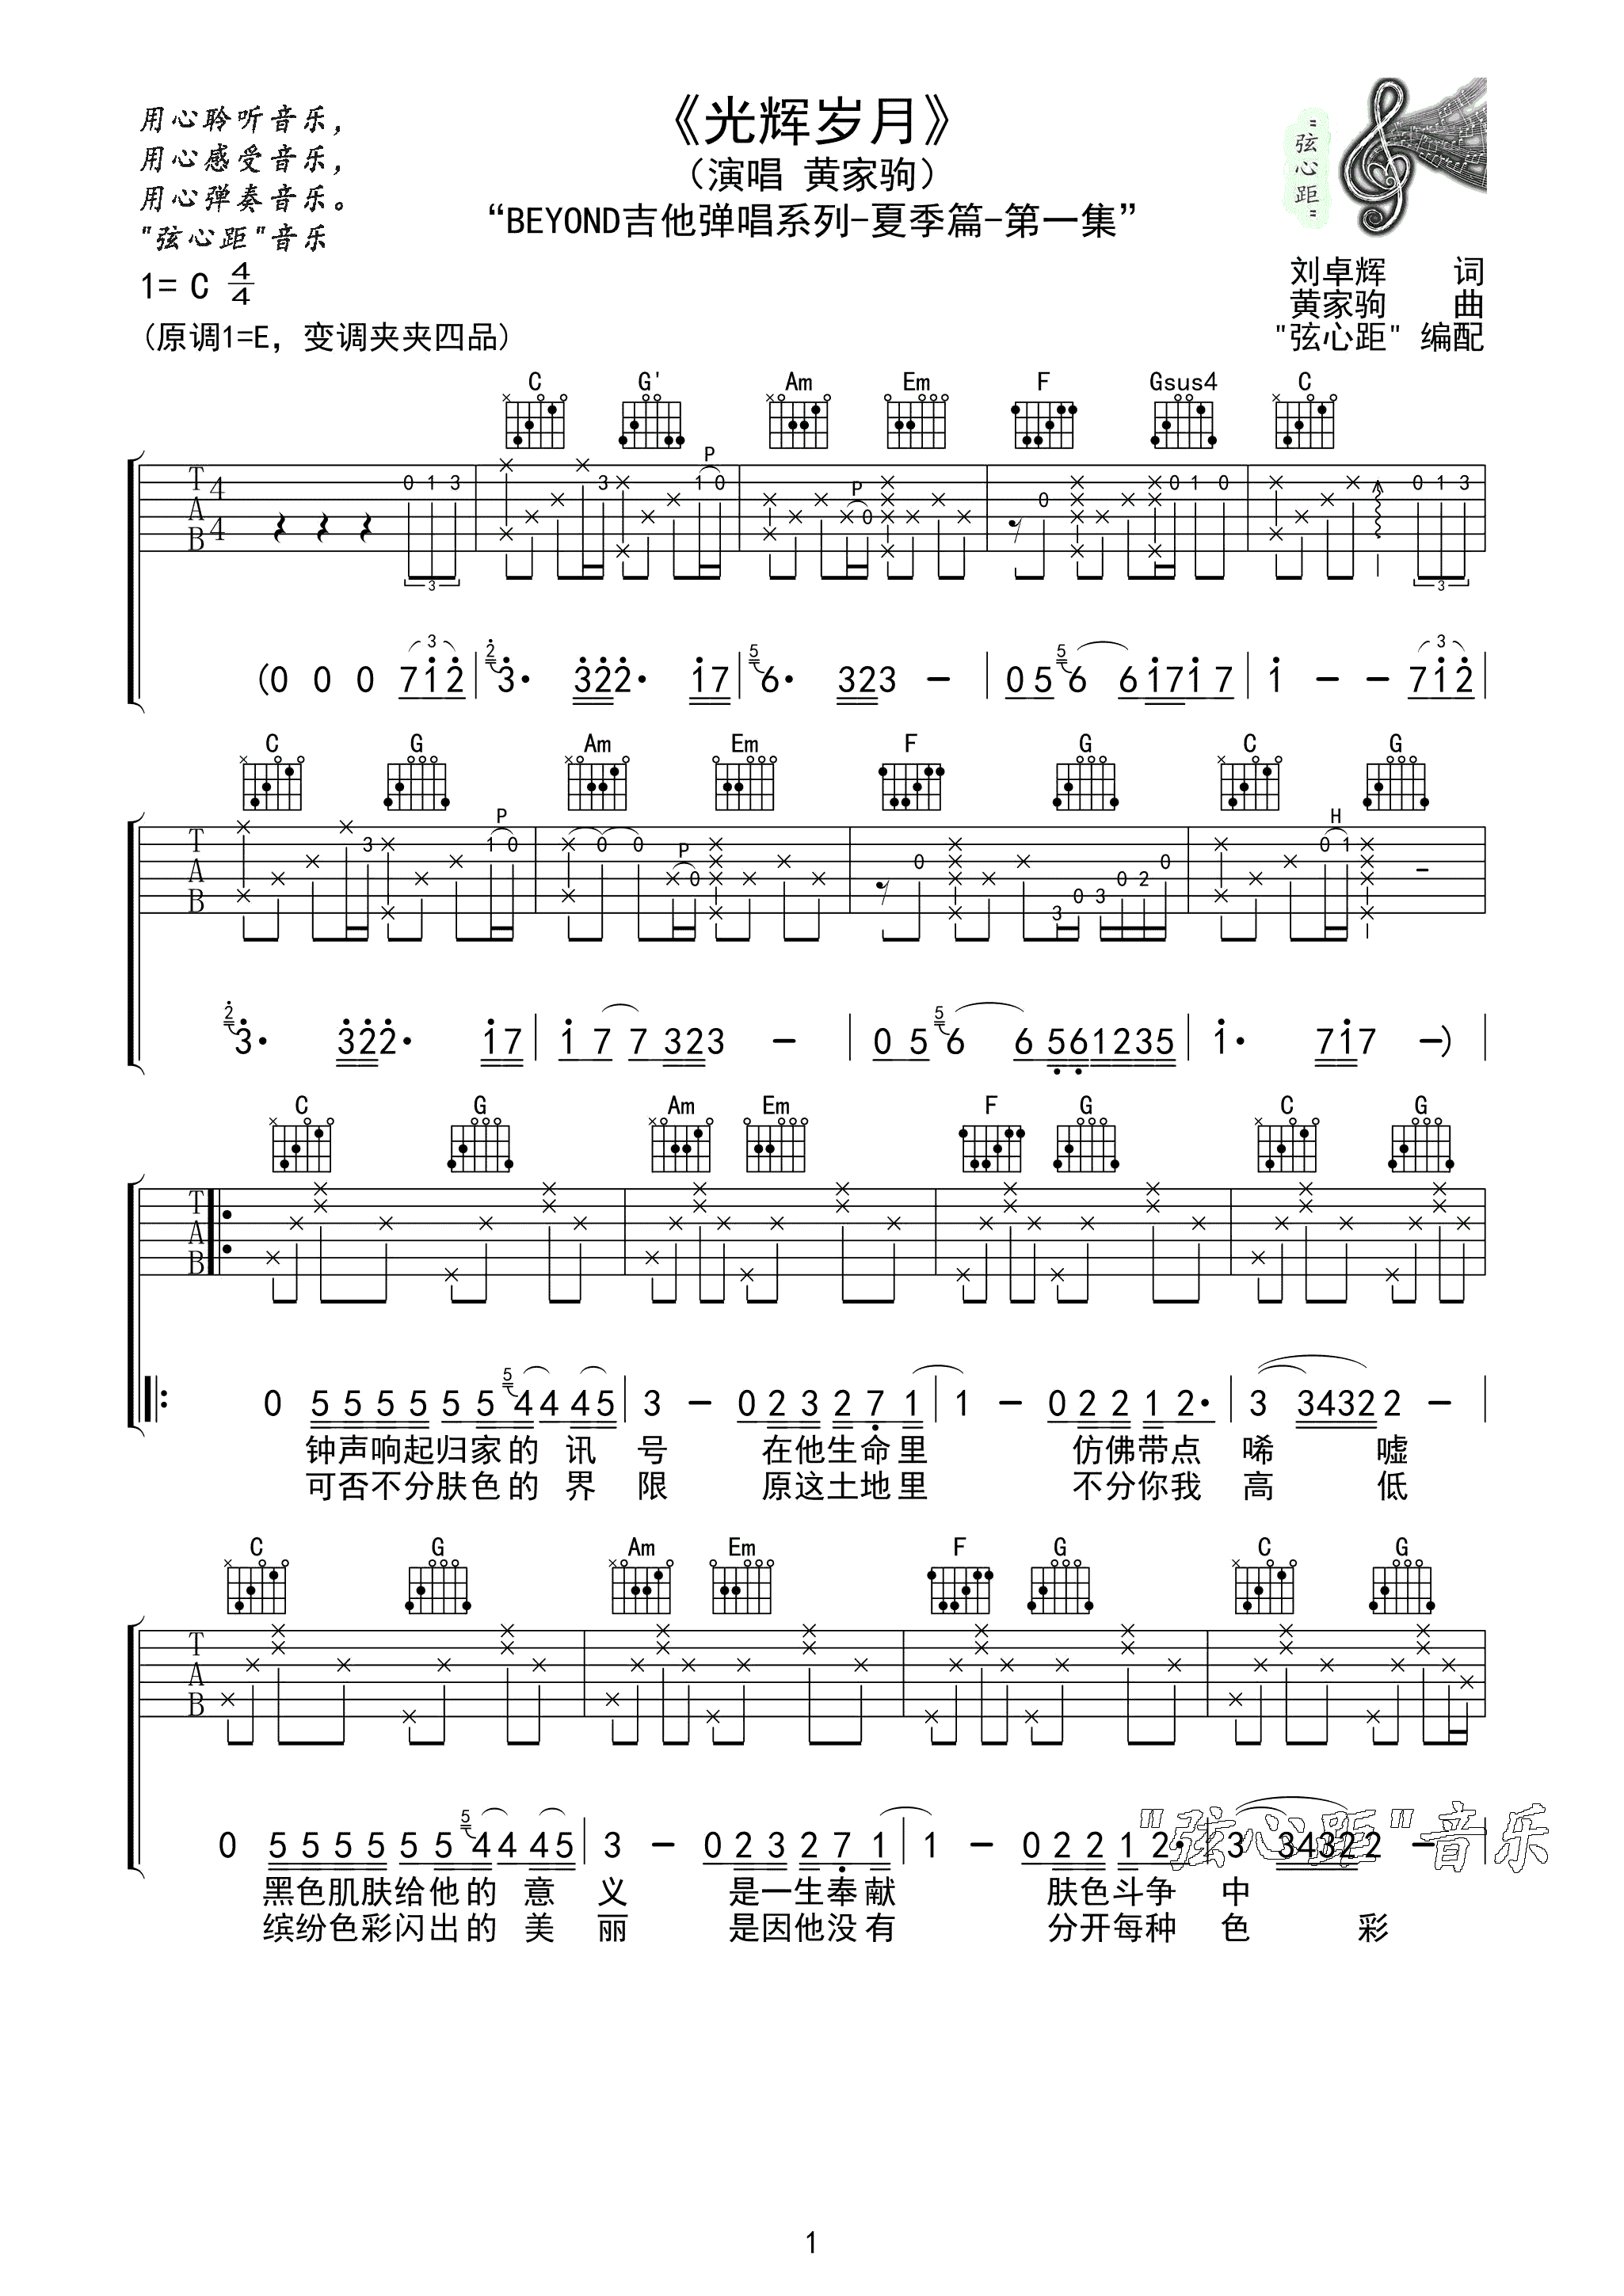 BEYOND《光辉岁月》吉他谱-C调简单原版吉他谱